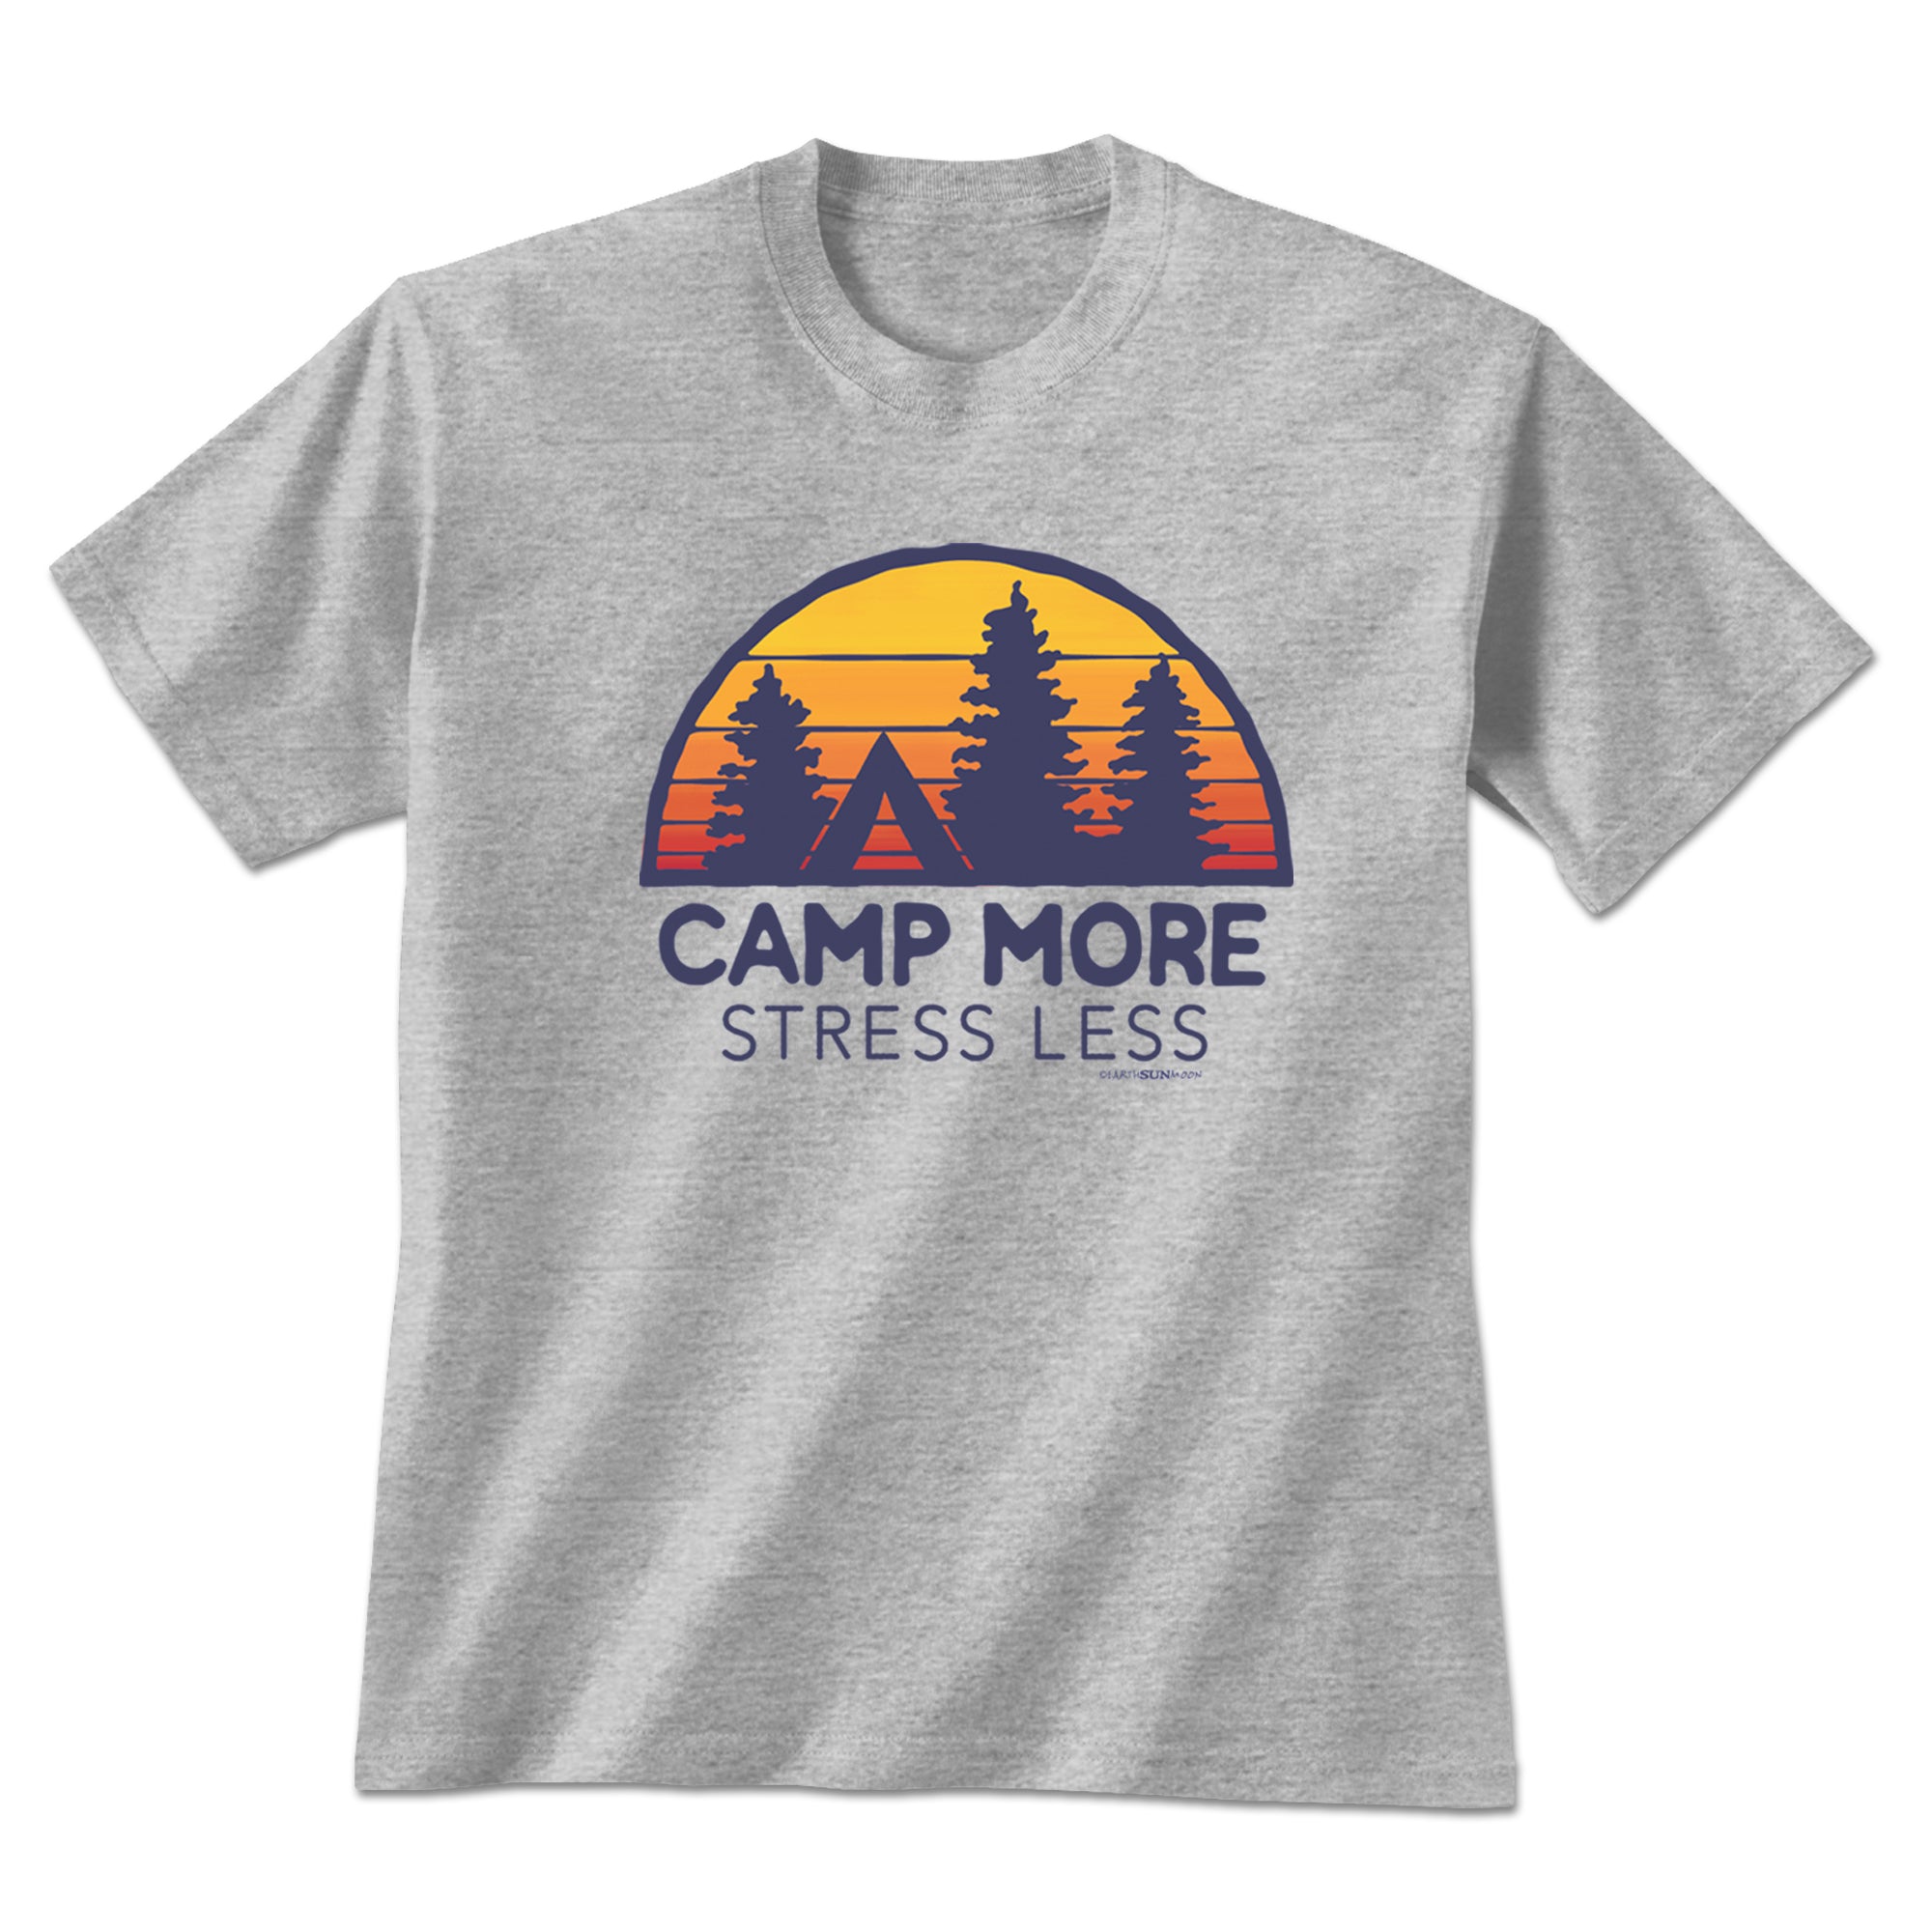 Camp More Stress Less T-Shirt - Sports Grey - 3X